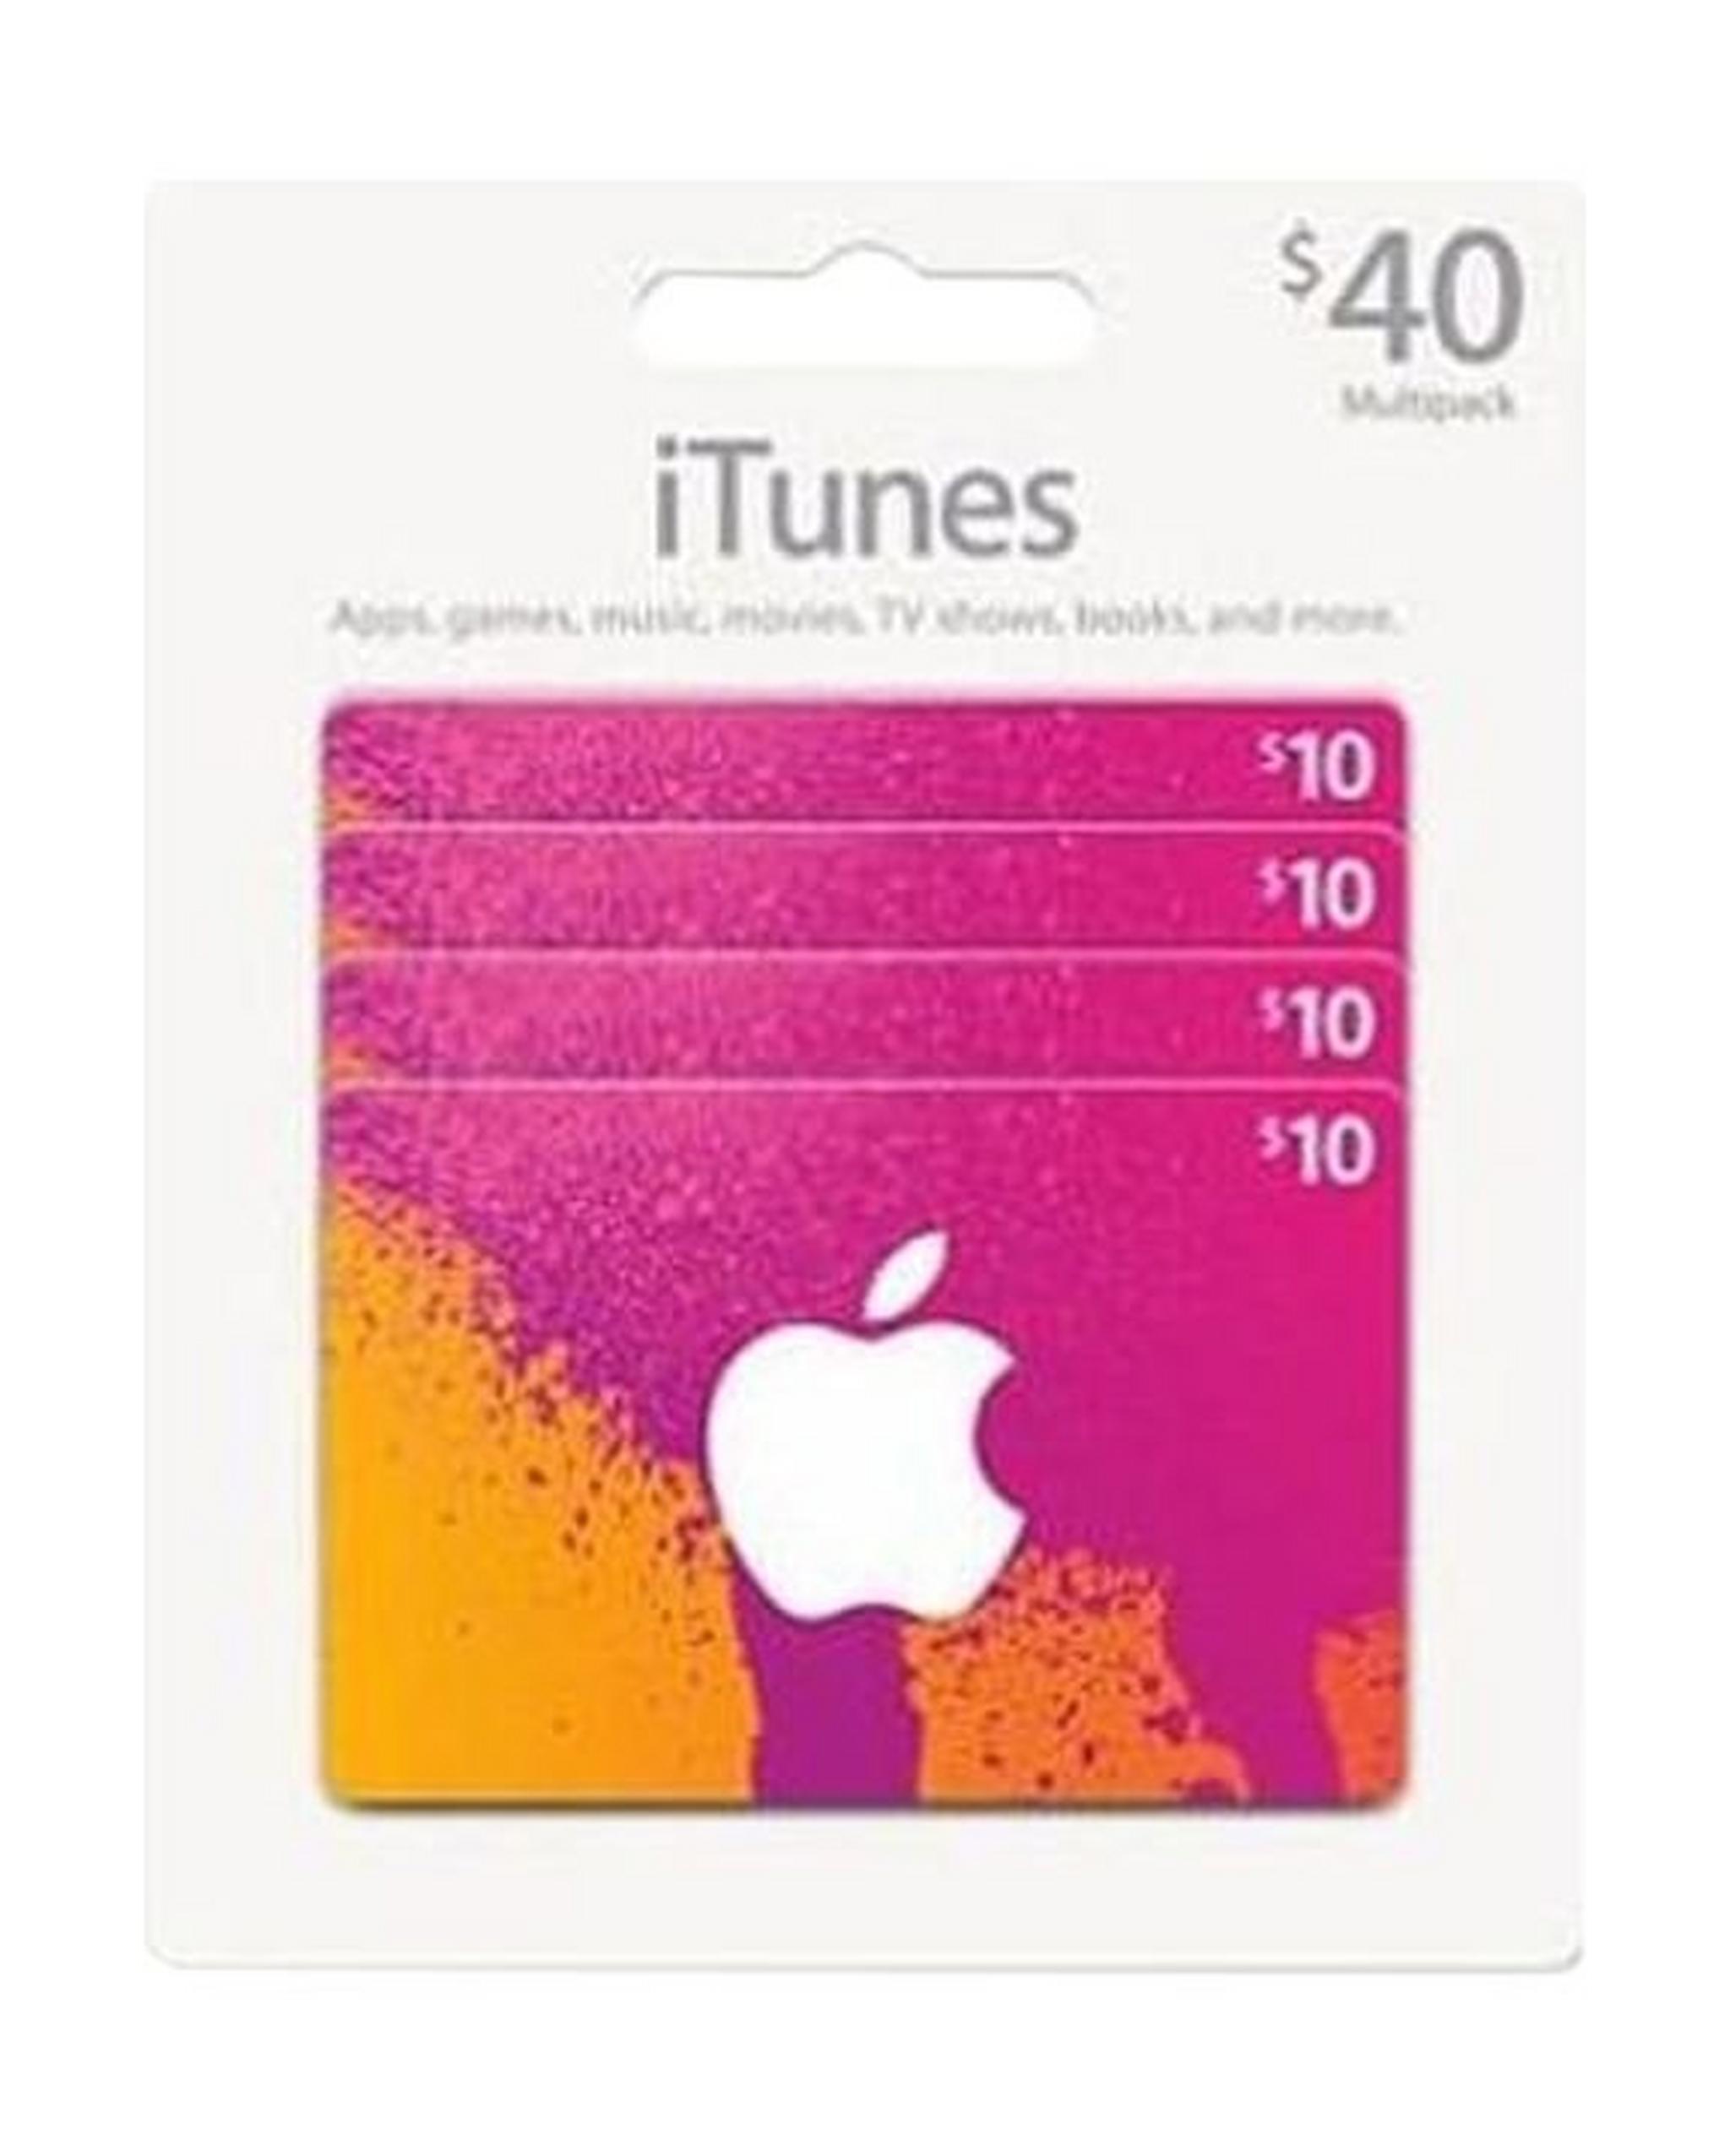 Apple iTunes Gift Card $40 (U.S. Account)